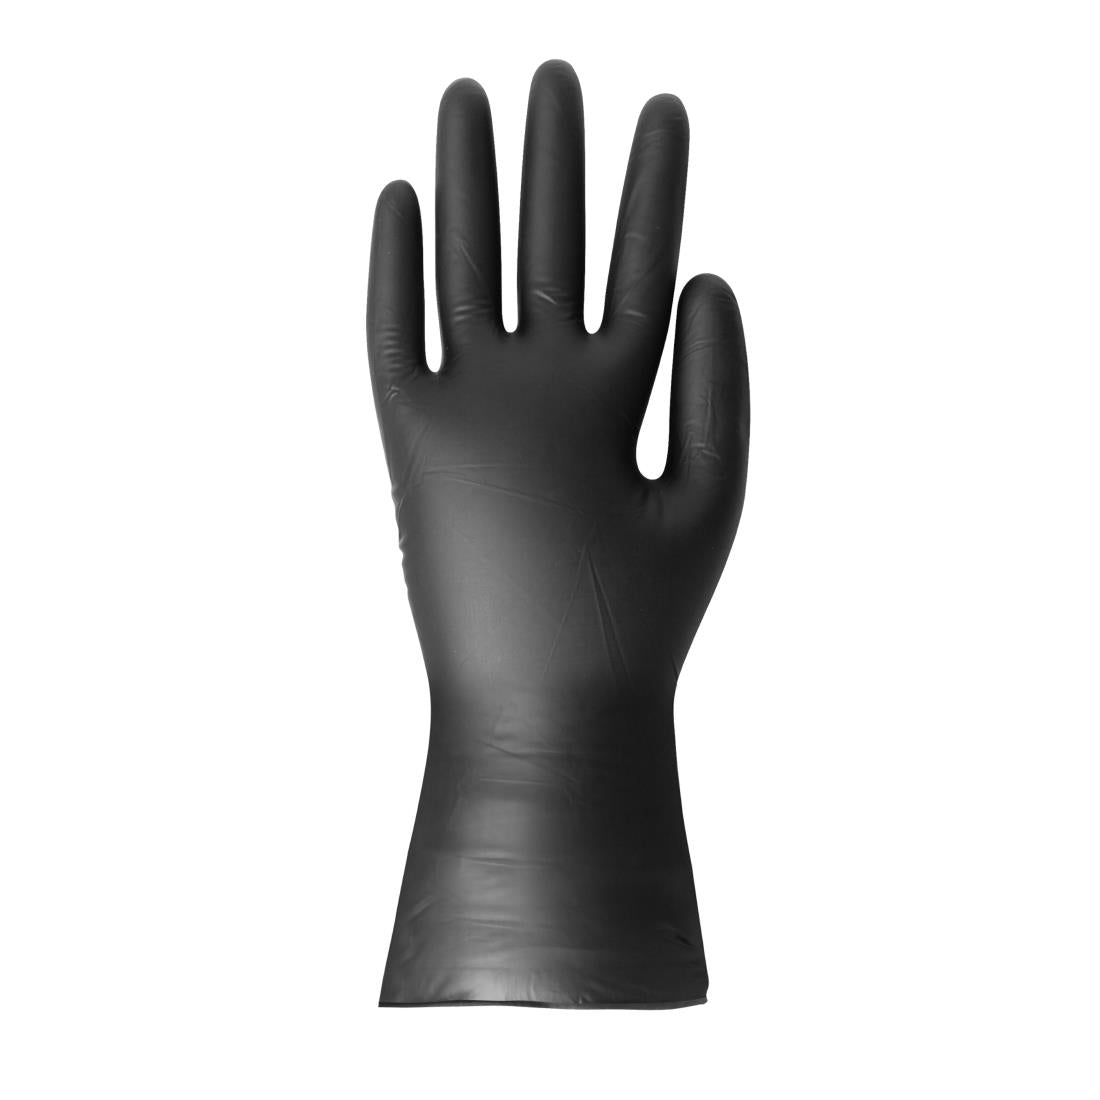 FJ748-S Hygiplas Vinyl Black Powder Free Glove S - pack 100 JD Catering Equipment Solutions Ltd